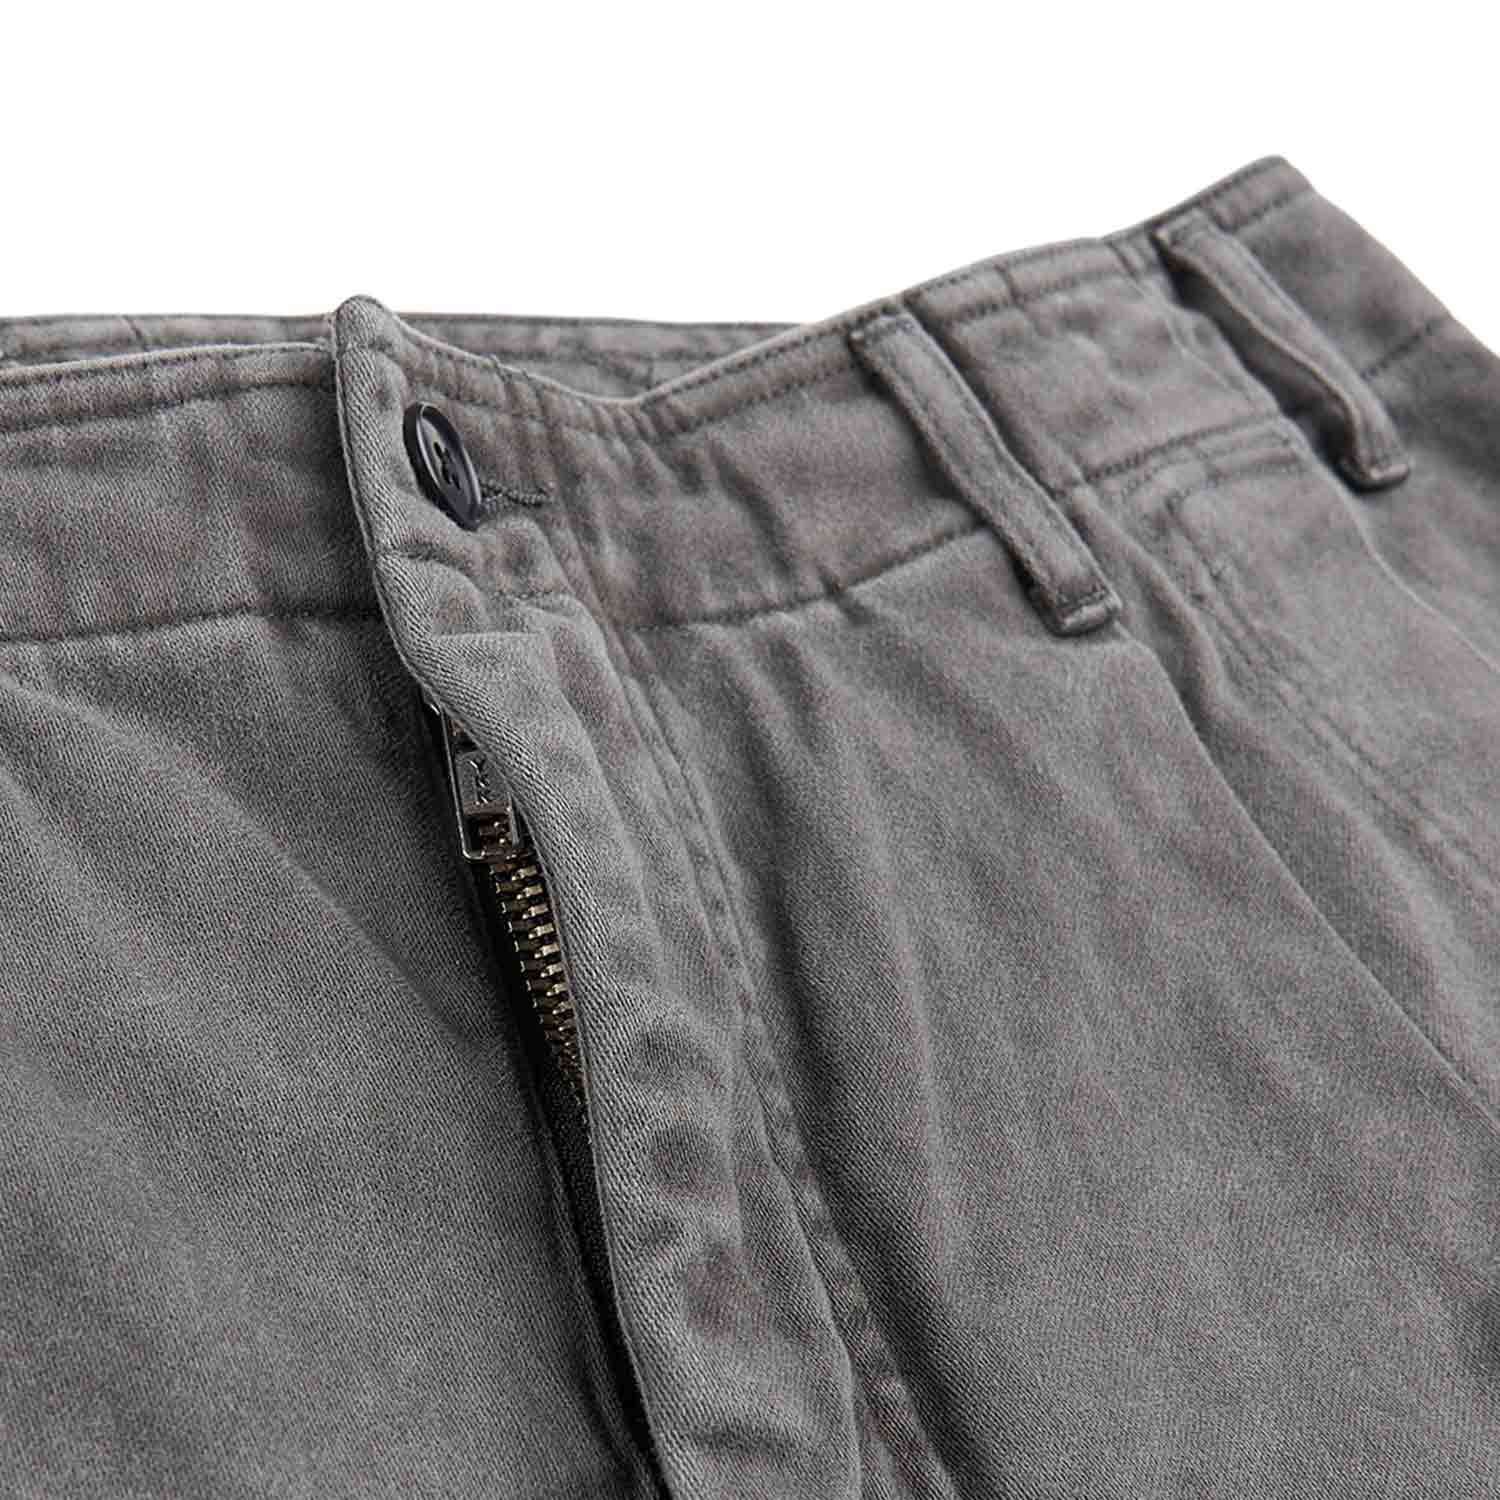 MELOO Men's Golf Dress Pants - Stretch Slim Fit Slacks Water Resistant Work Casual  Trousers Pockets Light Grey Large